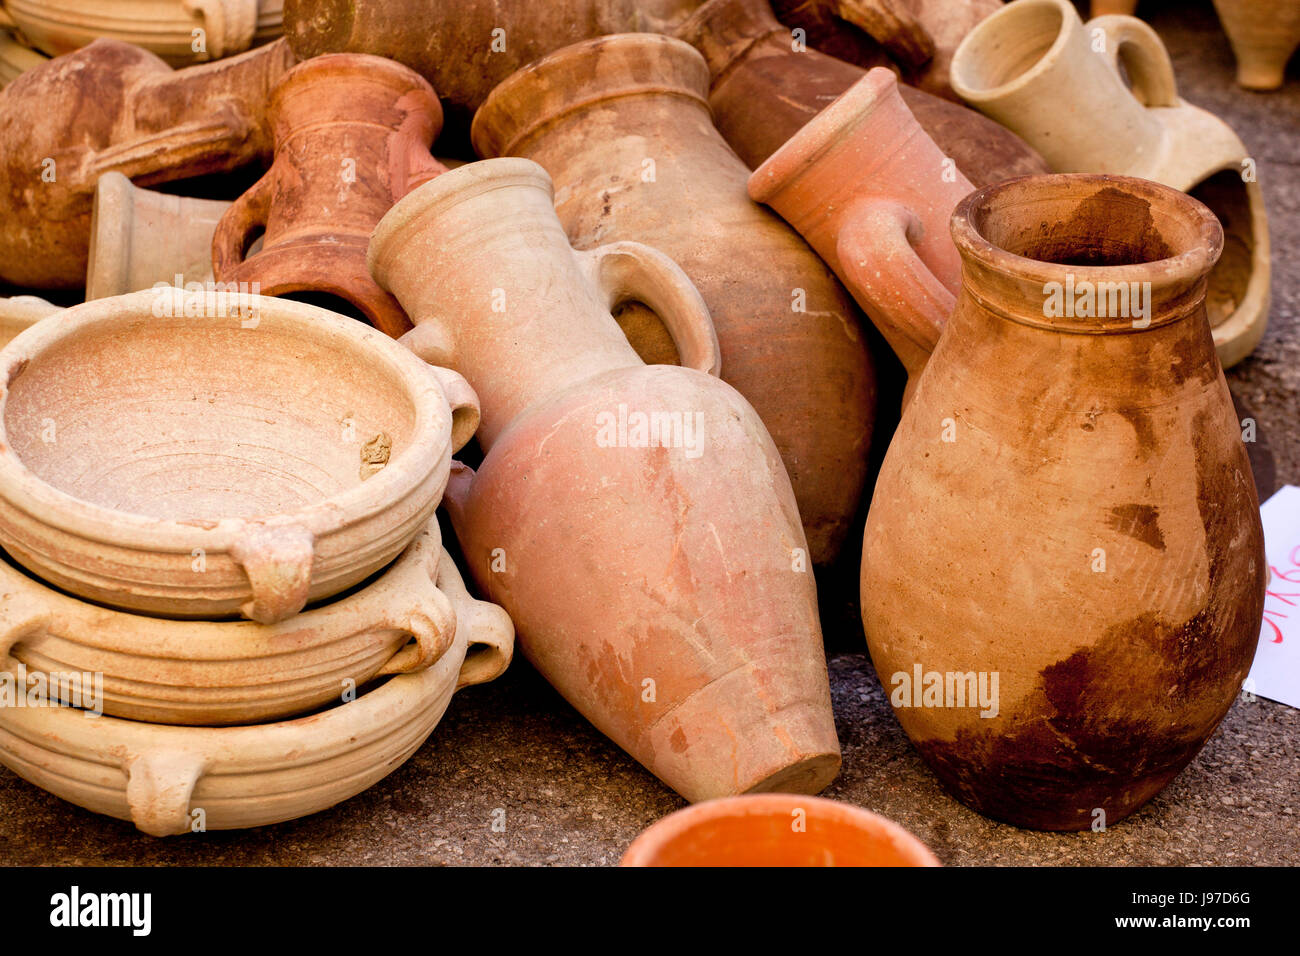 Vasen keramik -Fotos und -Bildmaterial in hoher Auflösung – Alamy